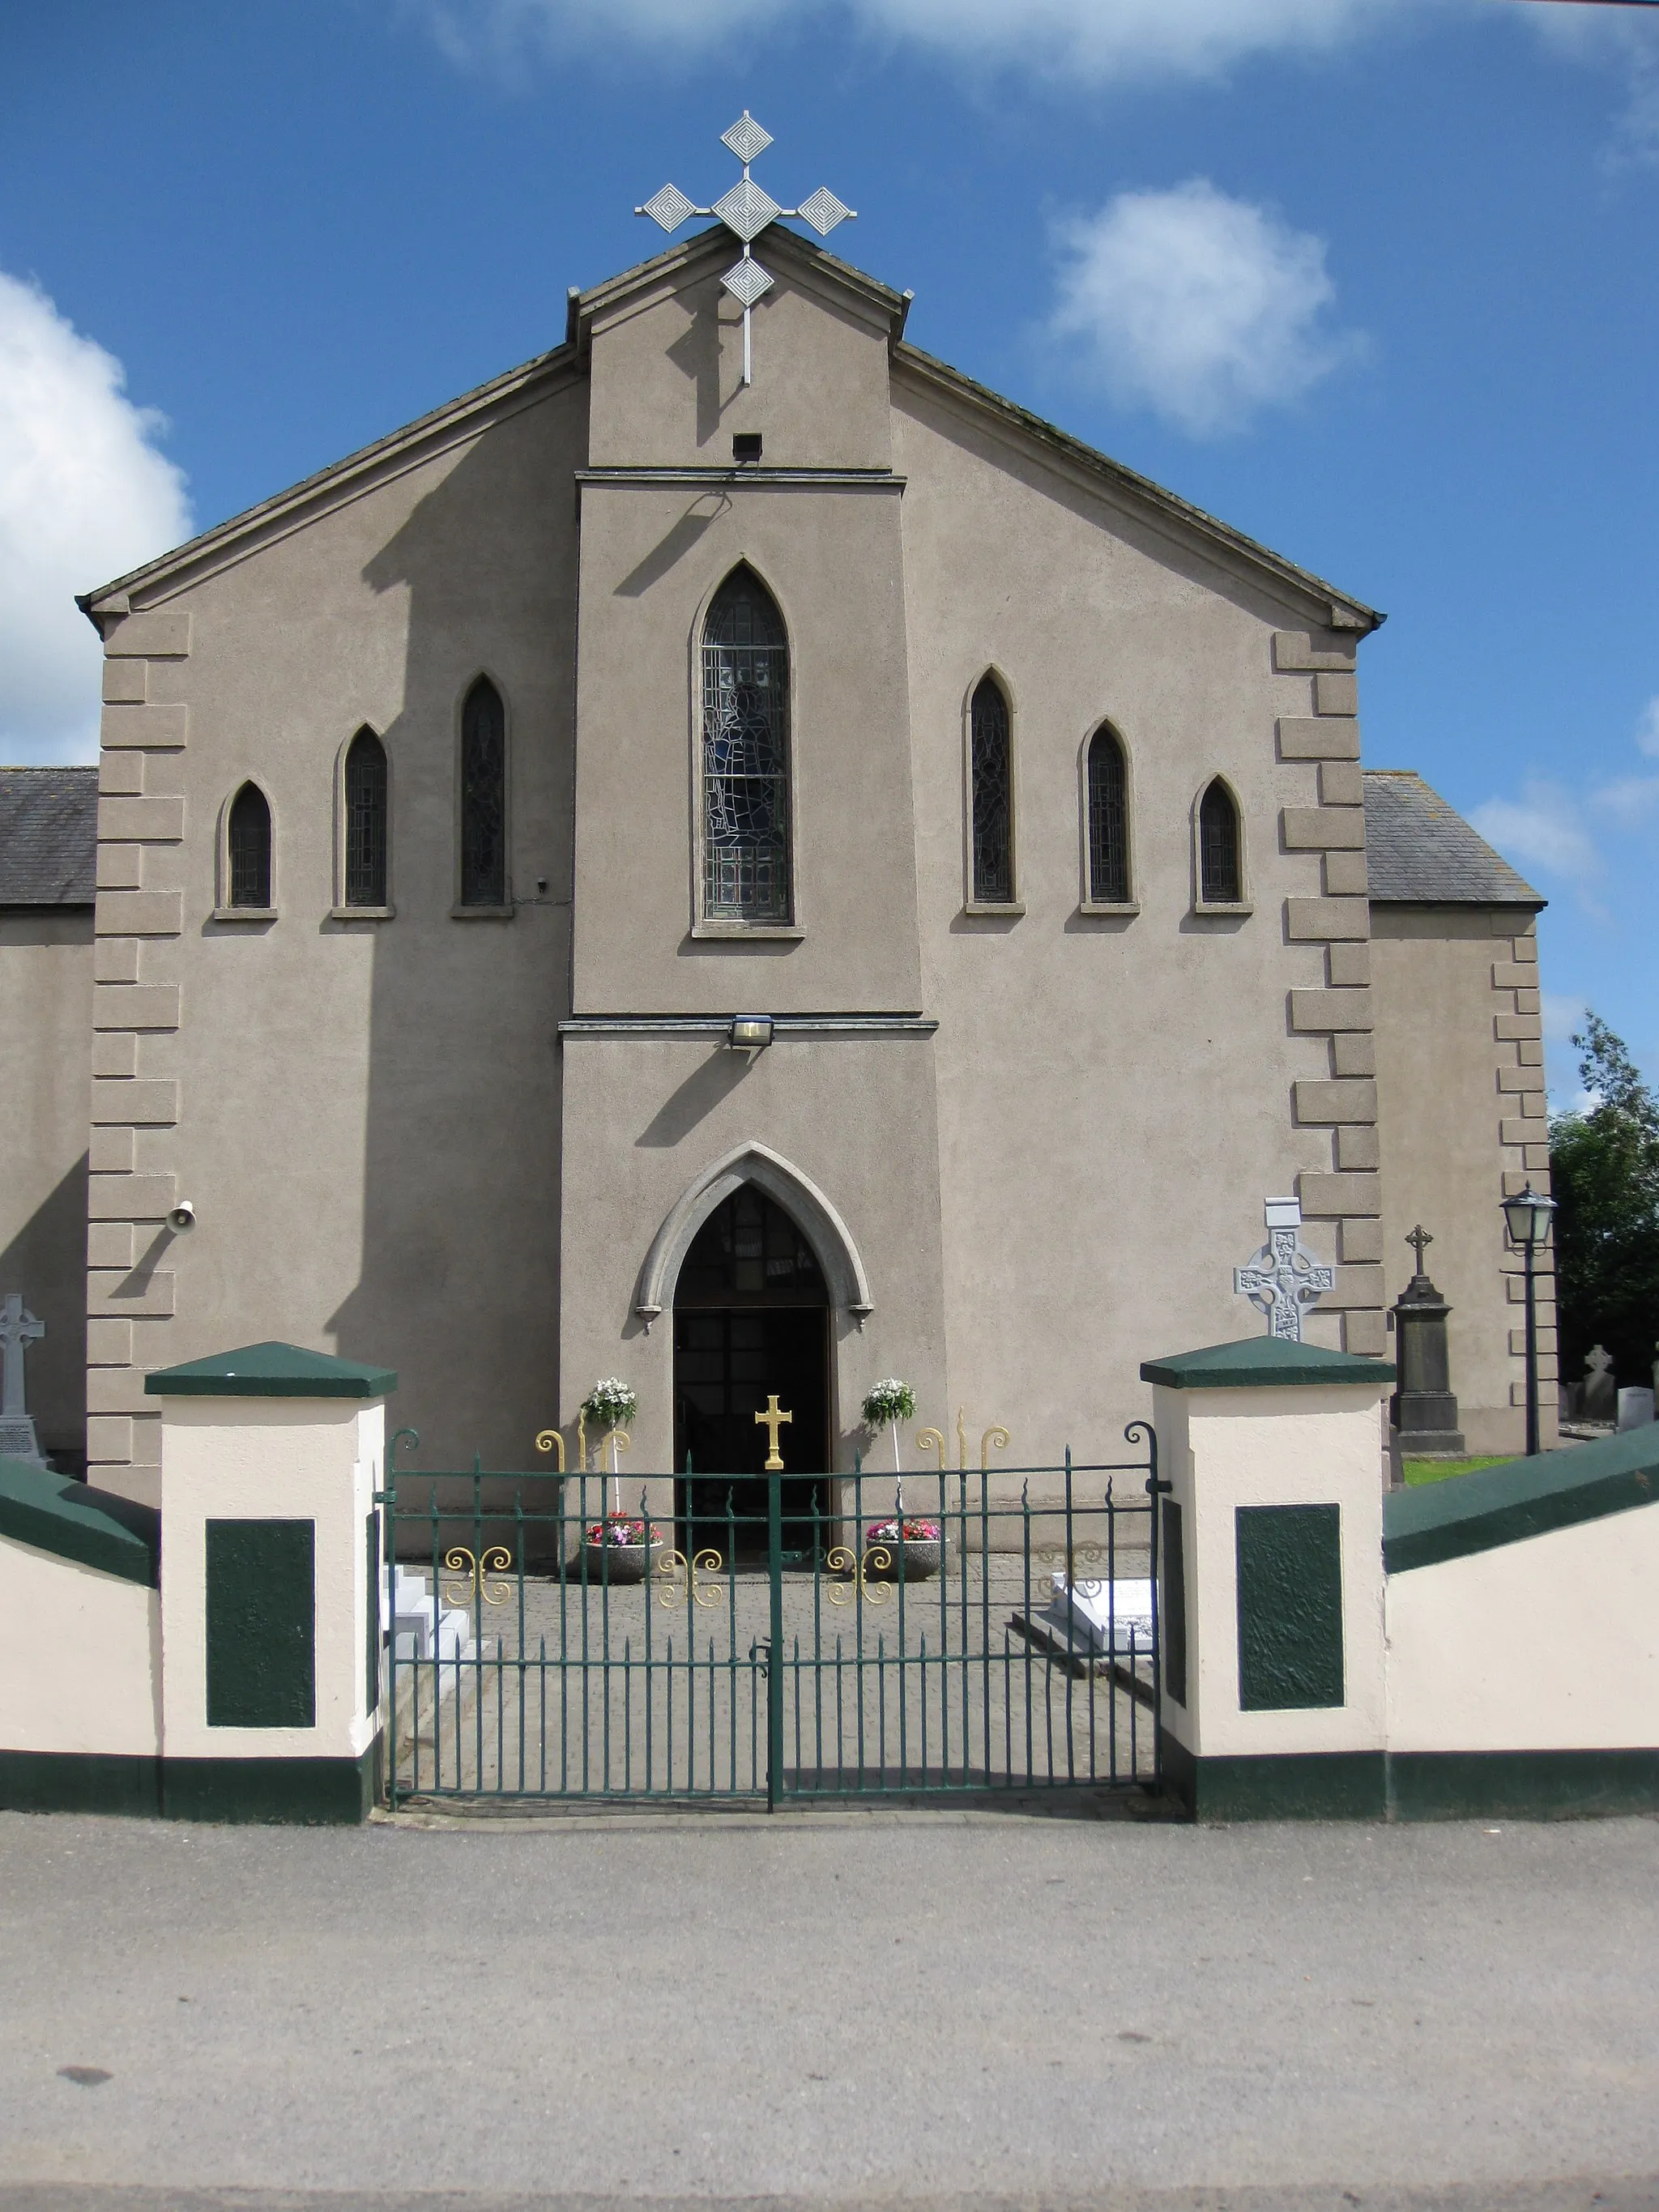 Photo showing: St. Brigid's church, Kilrossanty, Co. Waterford, Ireland.